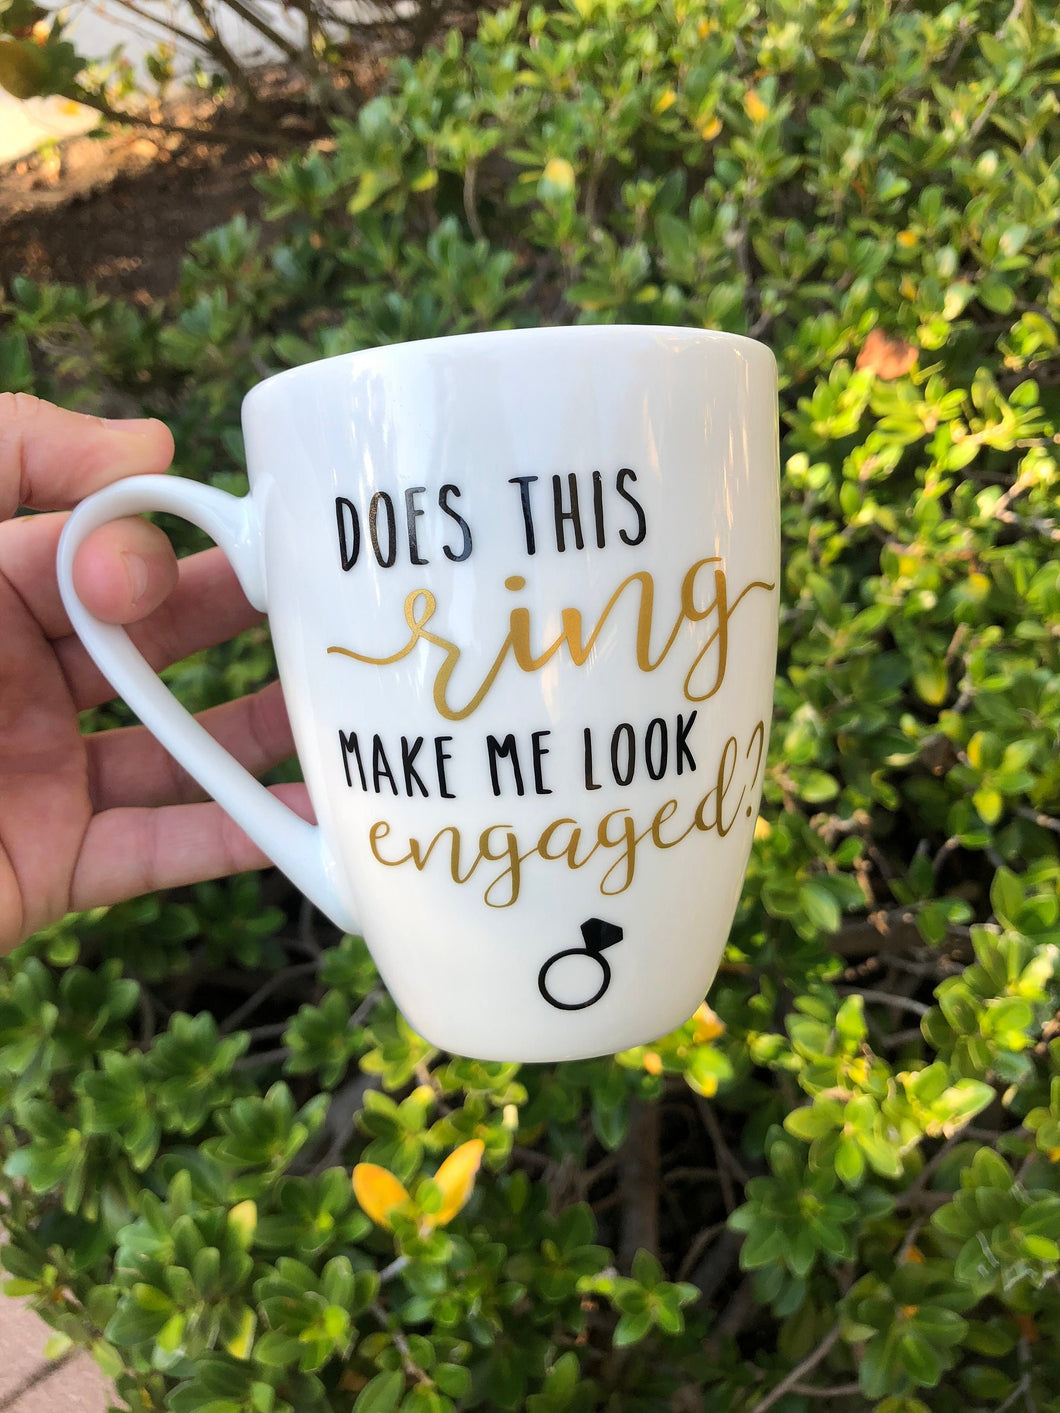 Does This Ring Make Me Look Engaged Coffee Mug